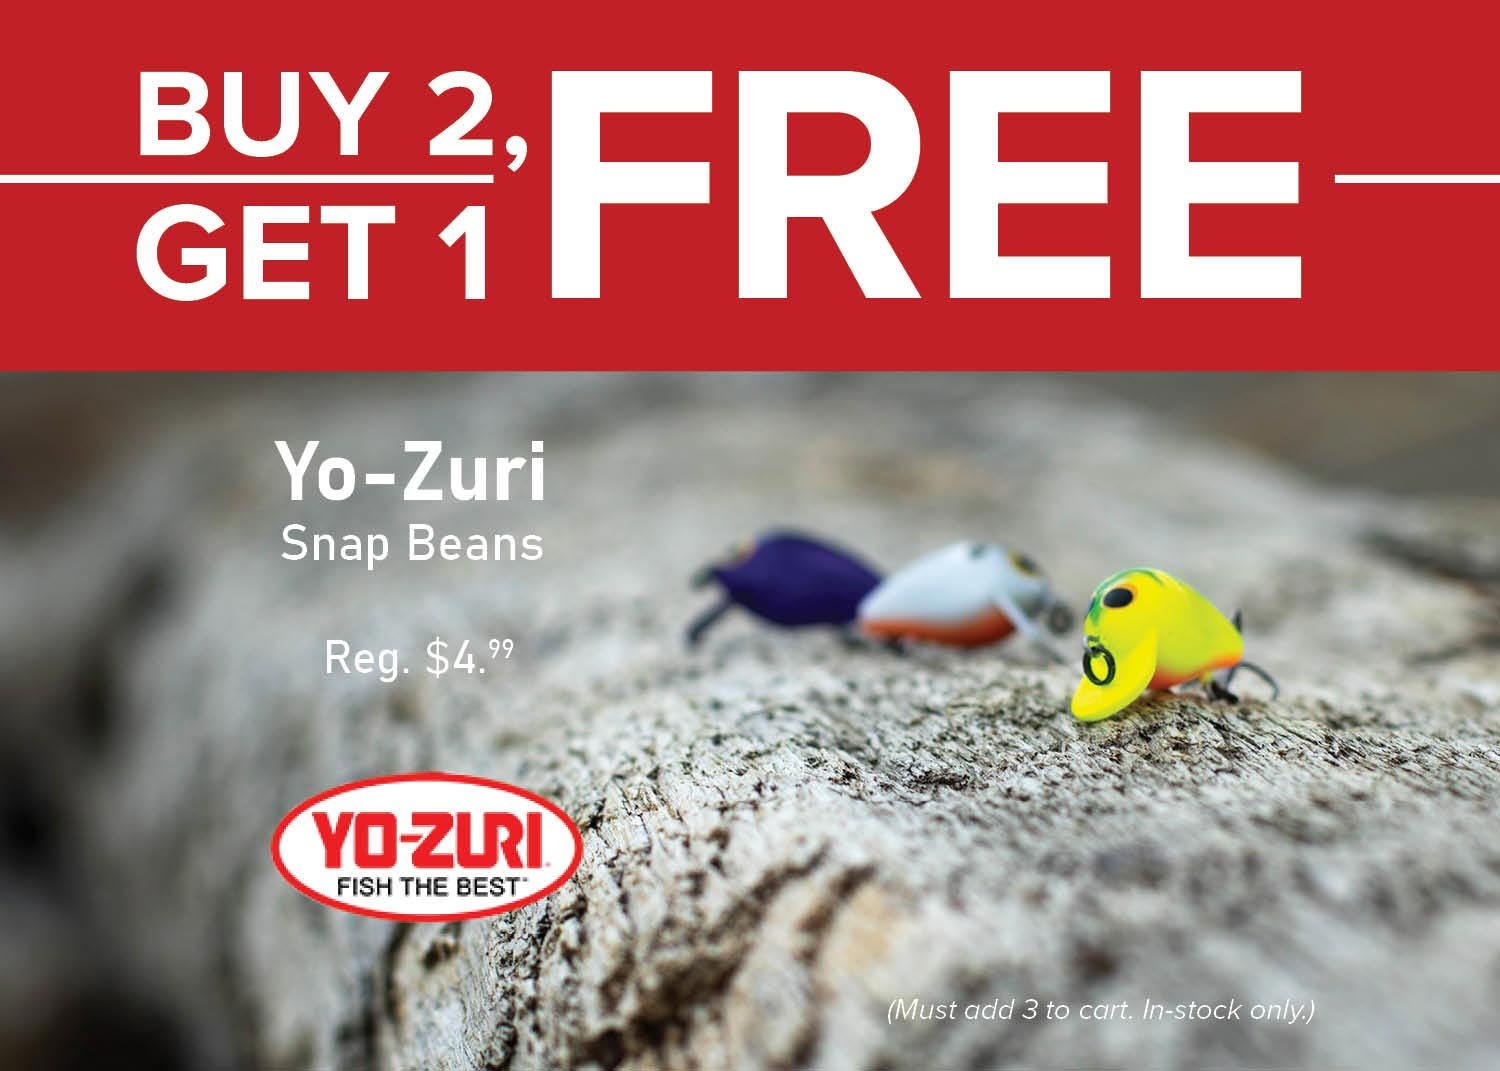 FishUSA.com: Yo-Zuri Snap Beans - Buy 2, Get 1 FREE